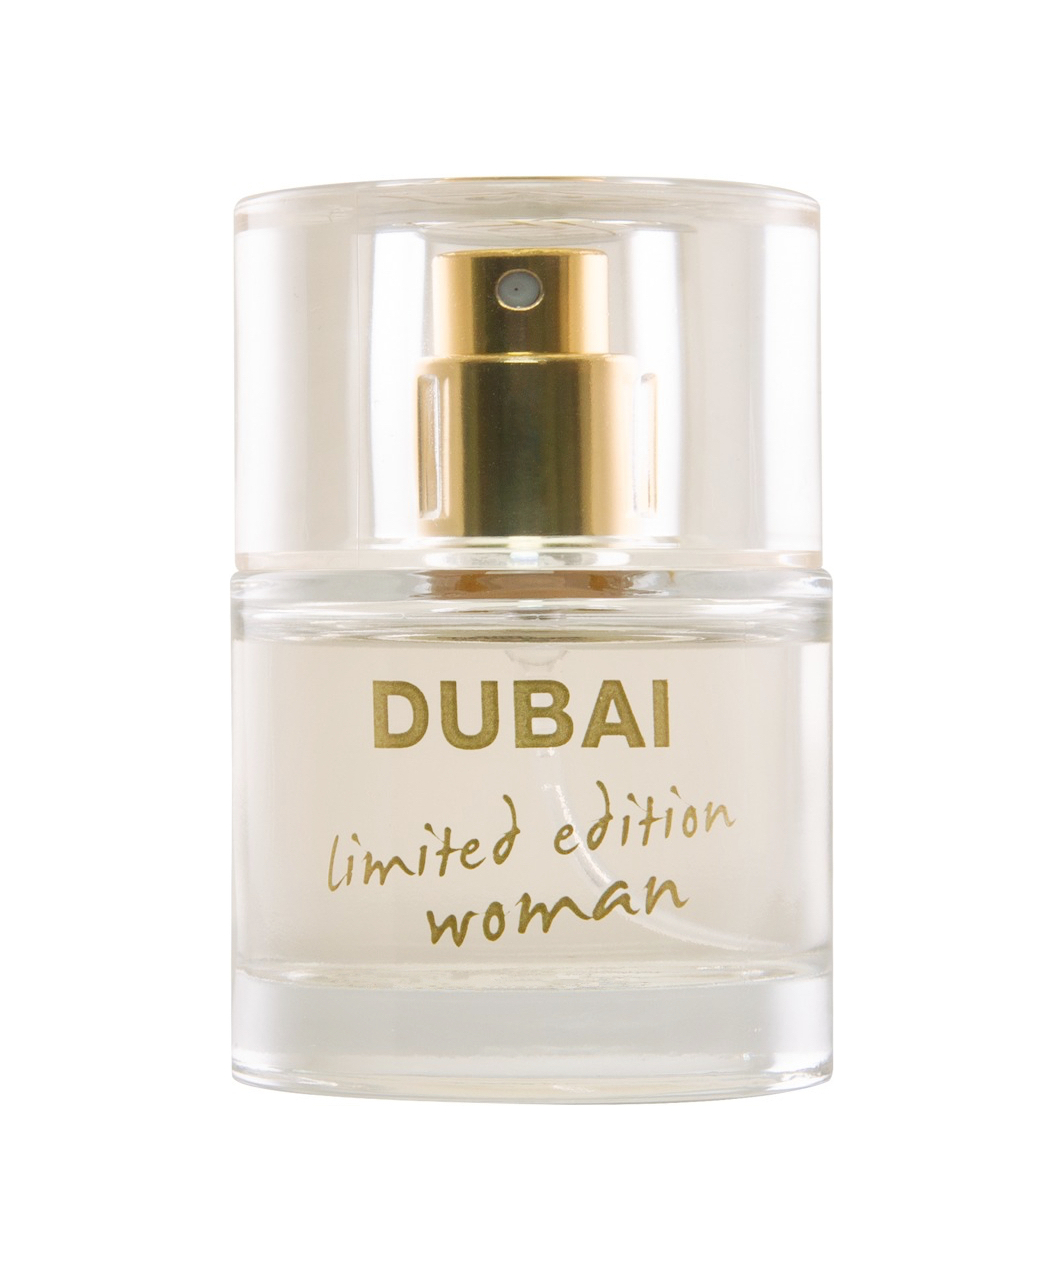 HOT Dubai Pheromone Perfume for Her (30 ml)